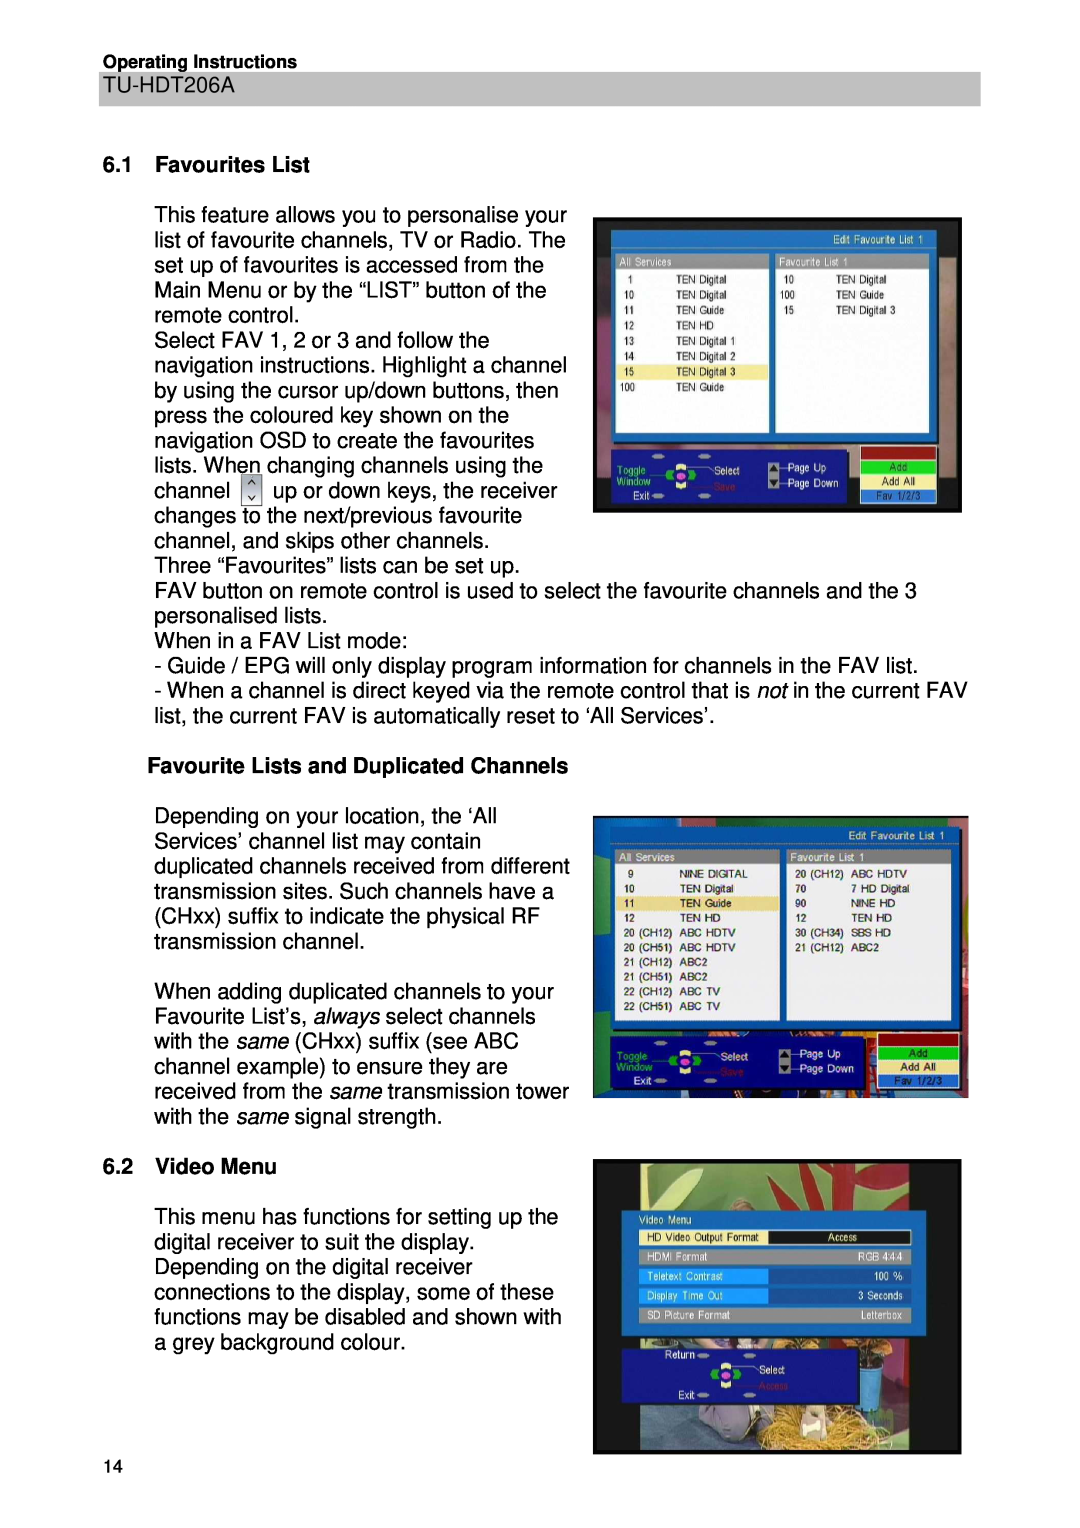 Panasonic TU-HDT206A manual 6.1Favourites List, Favourite Lists and Duplicated Channels, 6.2Video Menu 